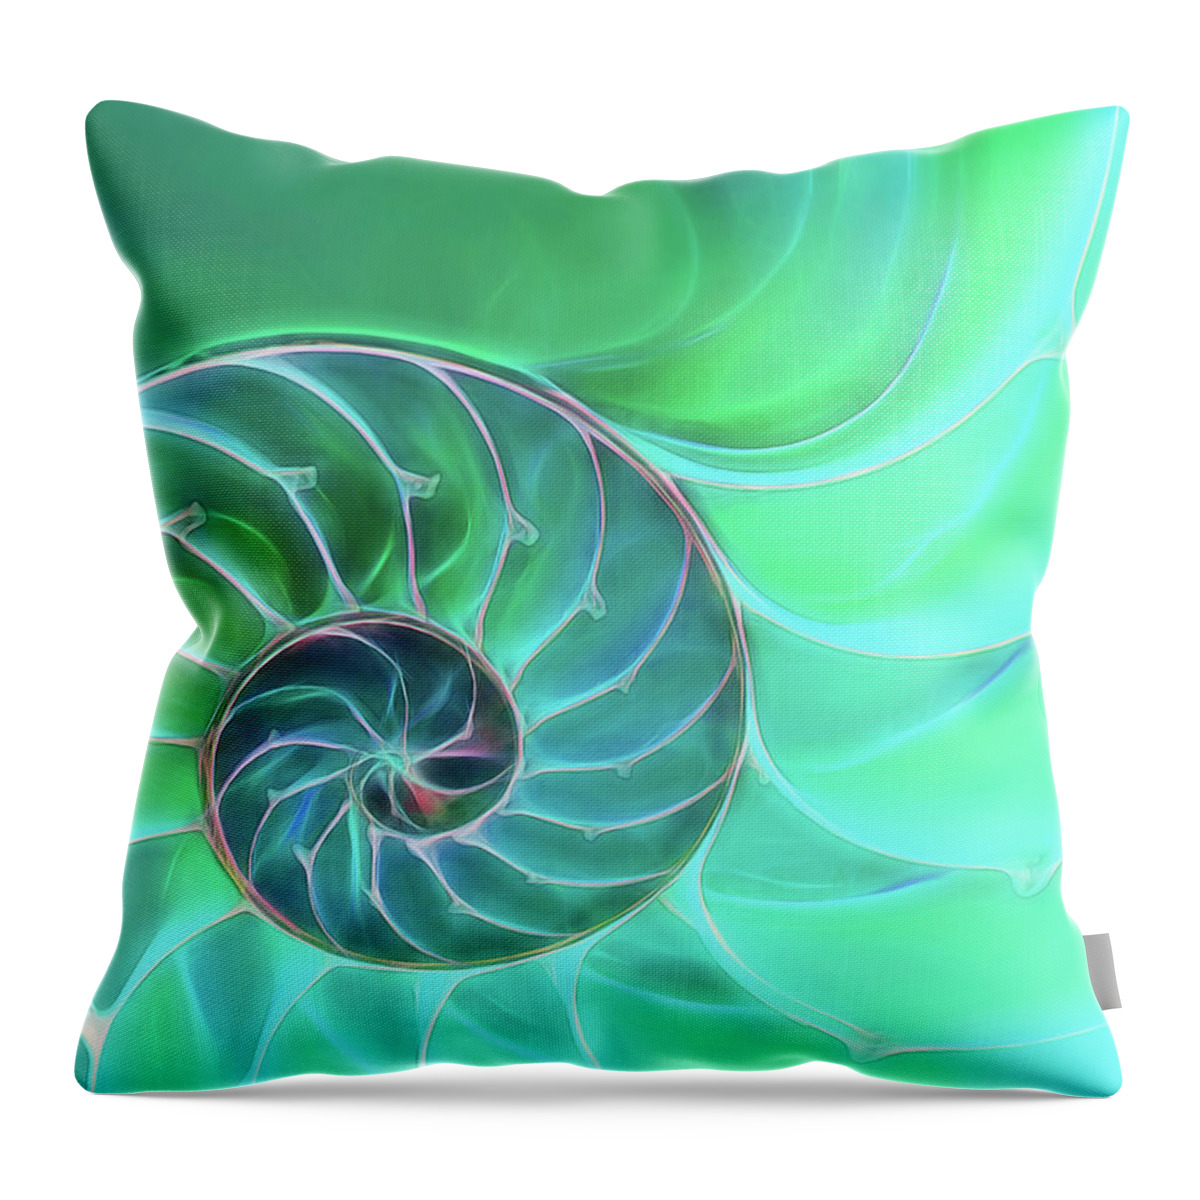 Nautilus Shell Throw Pillow featuring the photograph Nautilus Aqua Spiral by Gill Billington